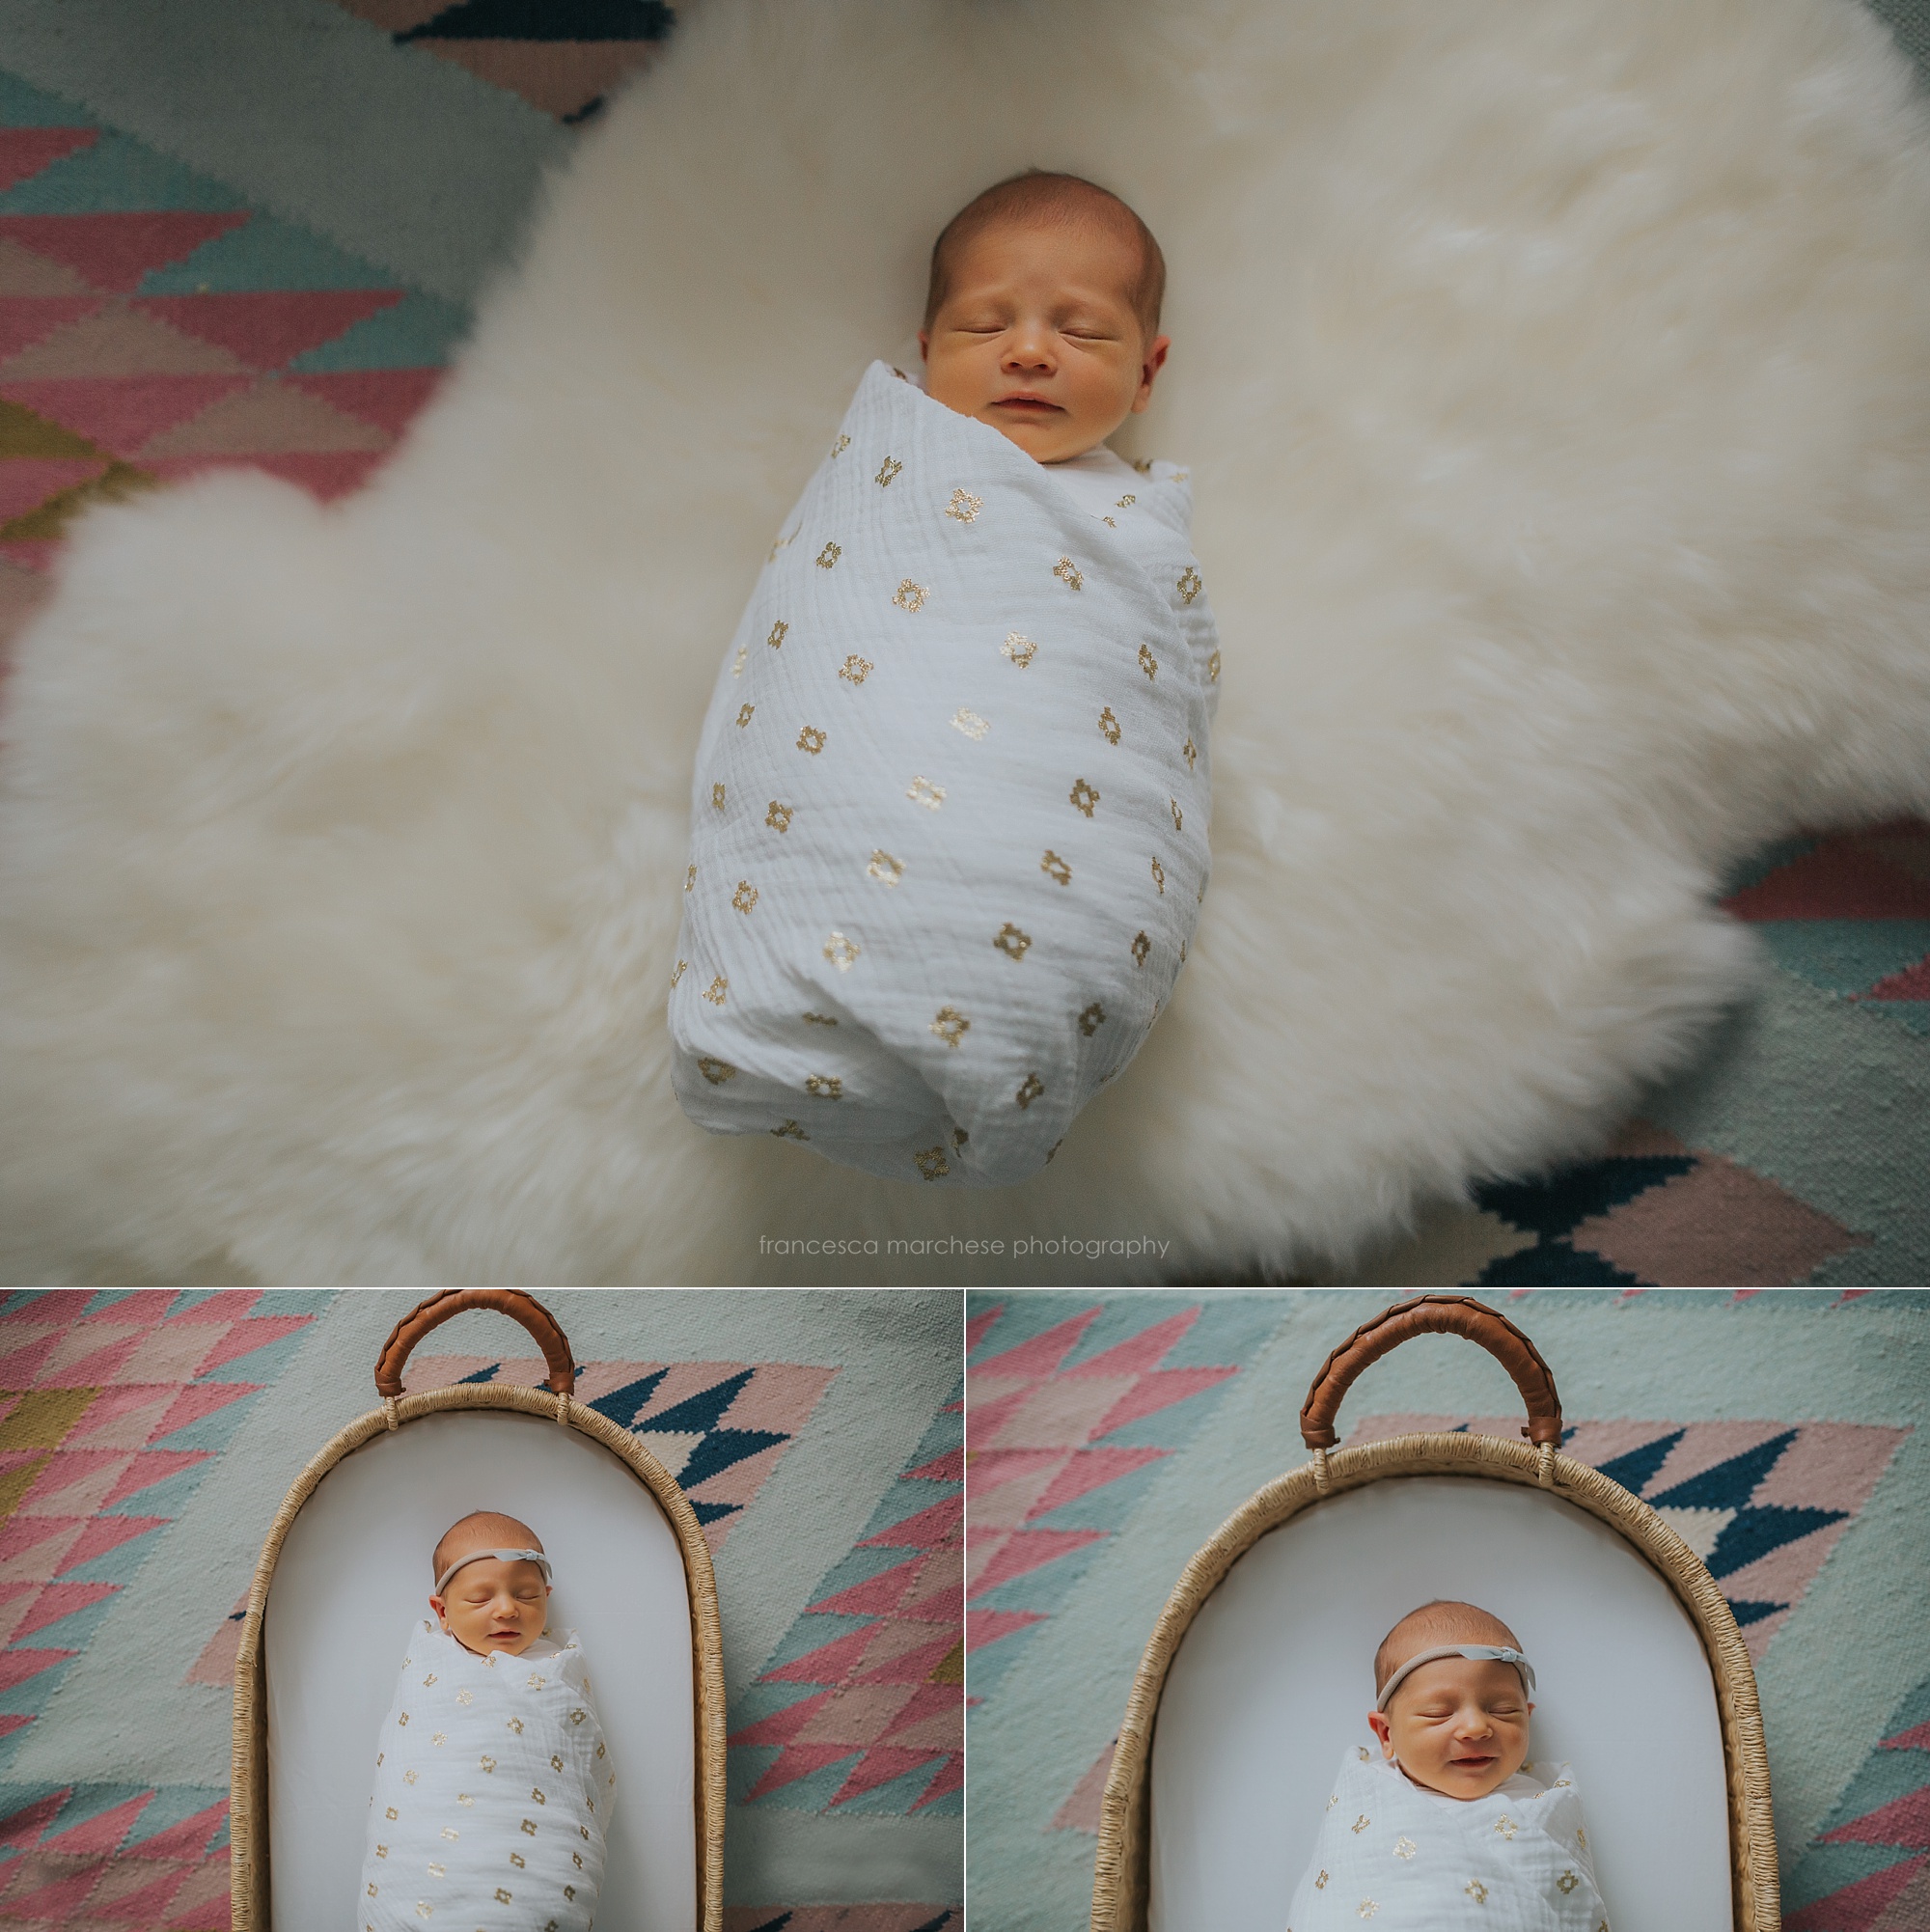 Francesca Marchese Photography boho newborn decor